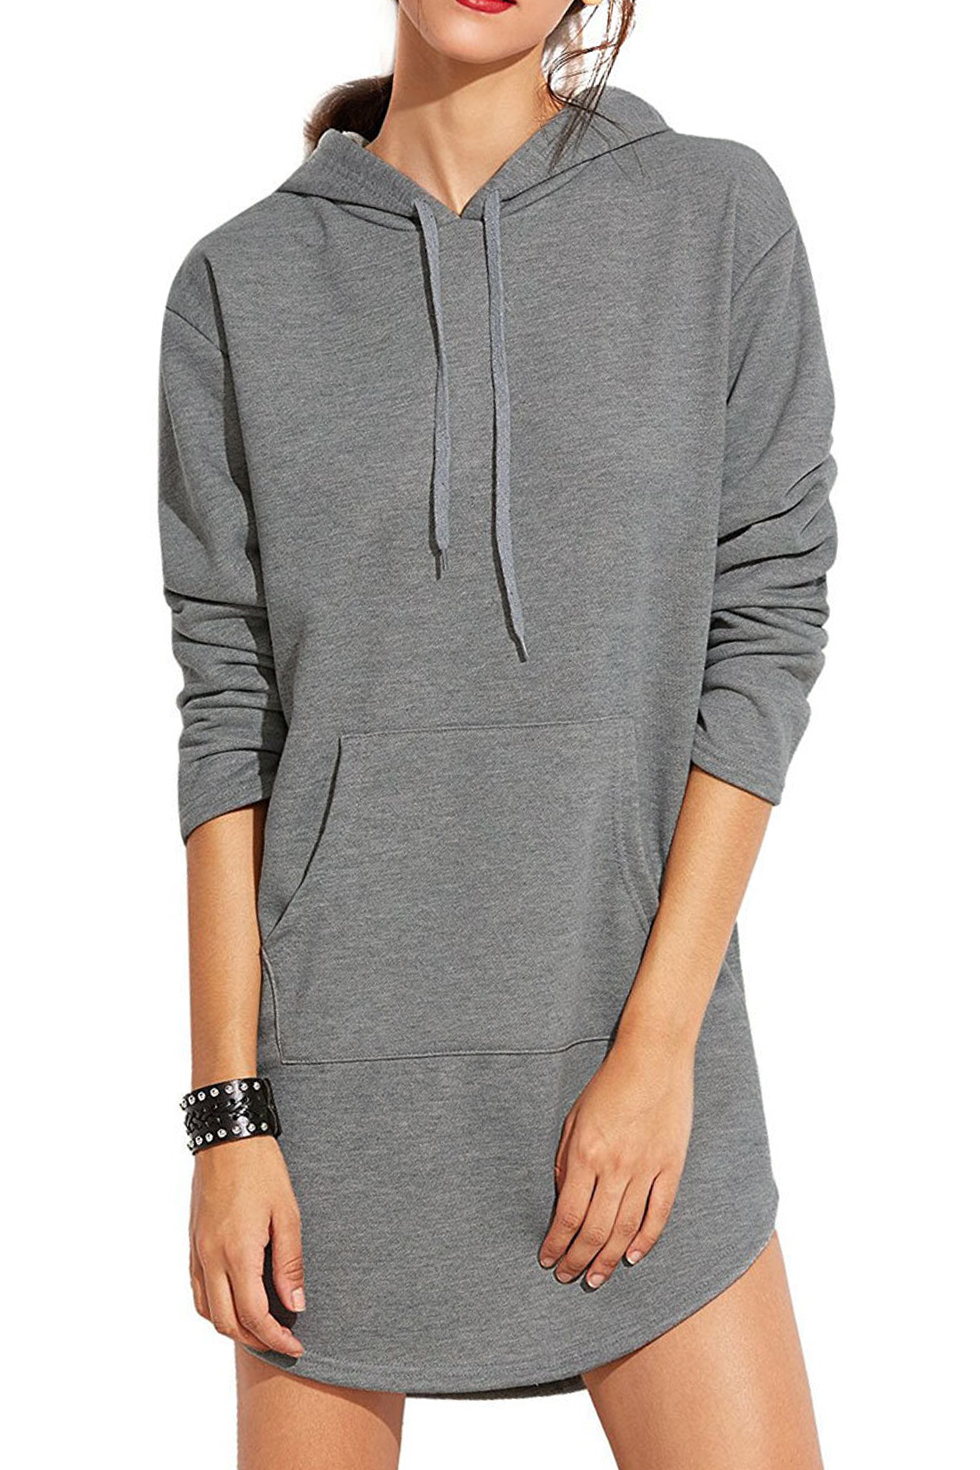 Negi Interesting Welder Casual Womens Pullover Sweatshirt Hoodies with Pockets